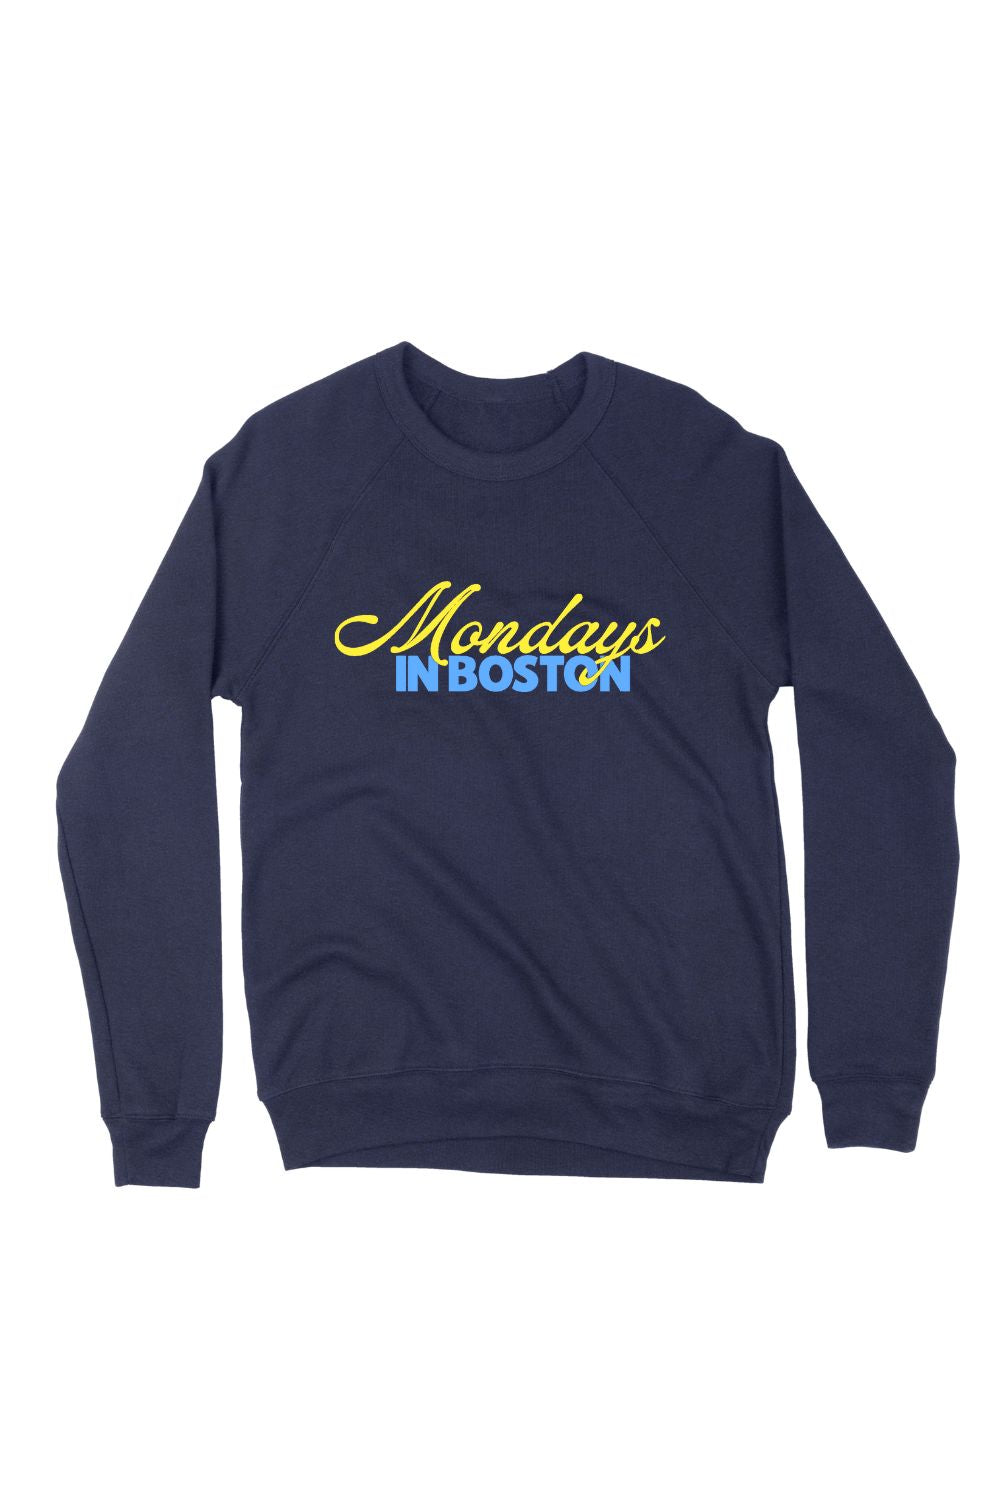 Mondays In Boston Sweatshirt